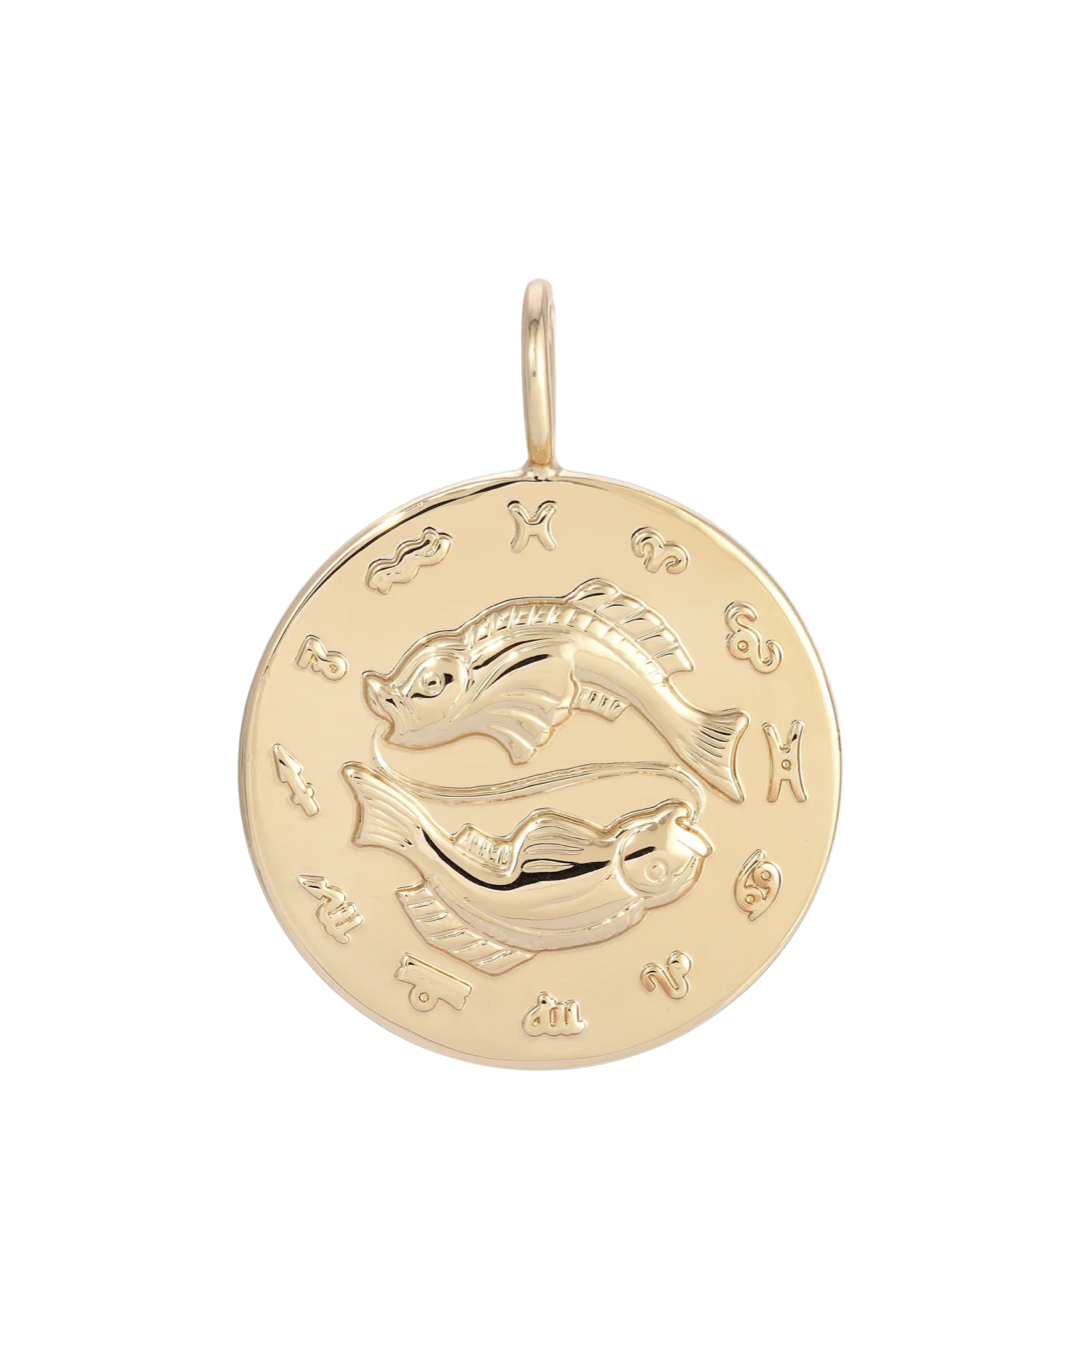 Zodiac Pendant Charm in Gold - Pisces